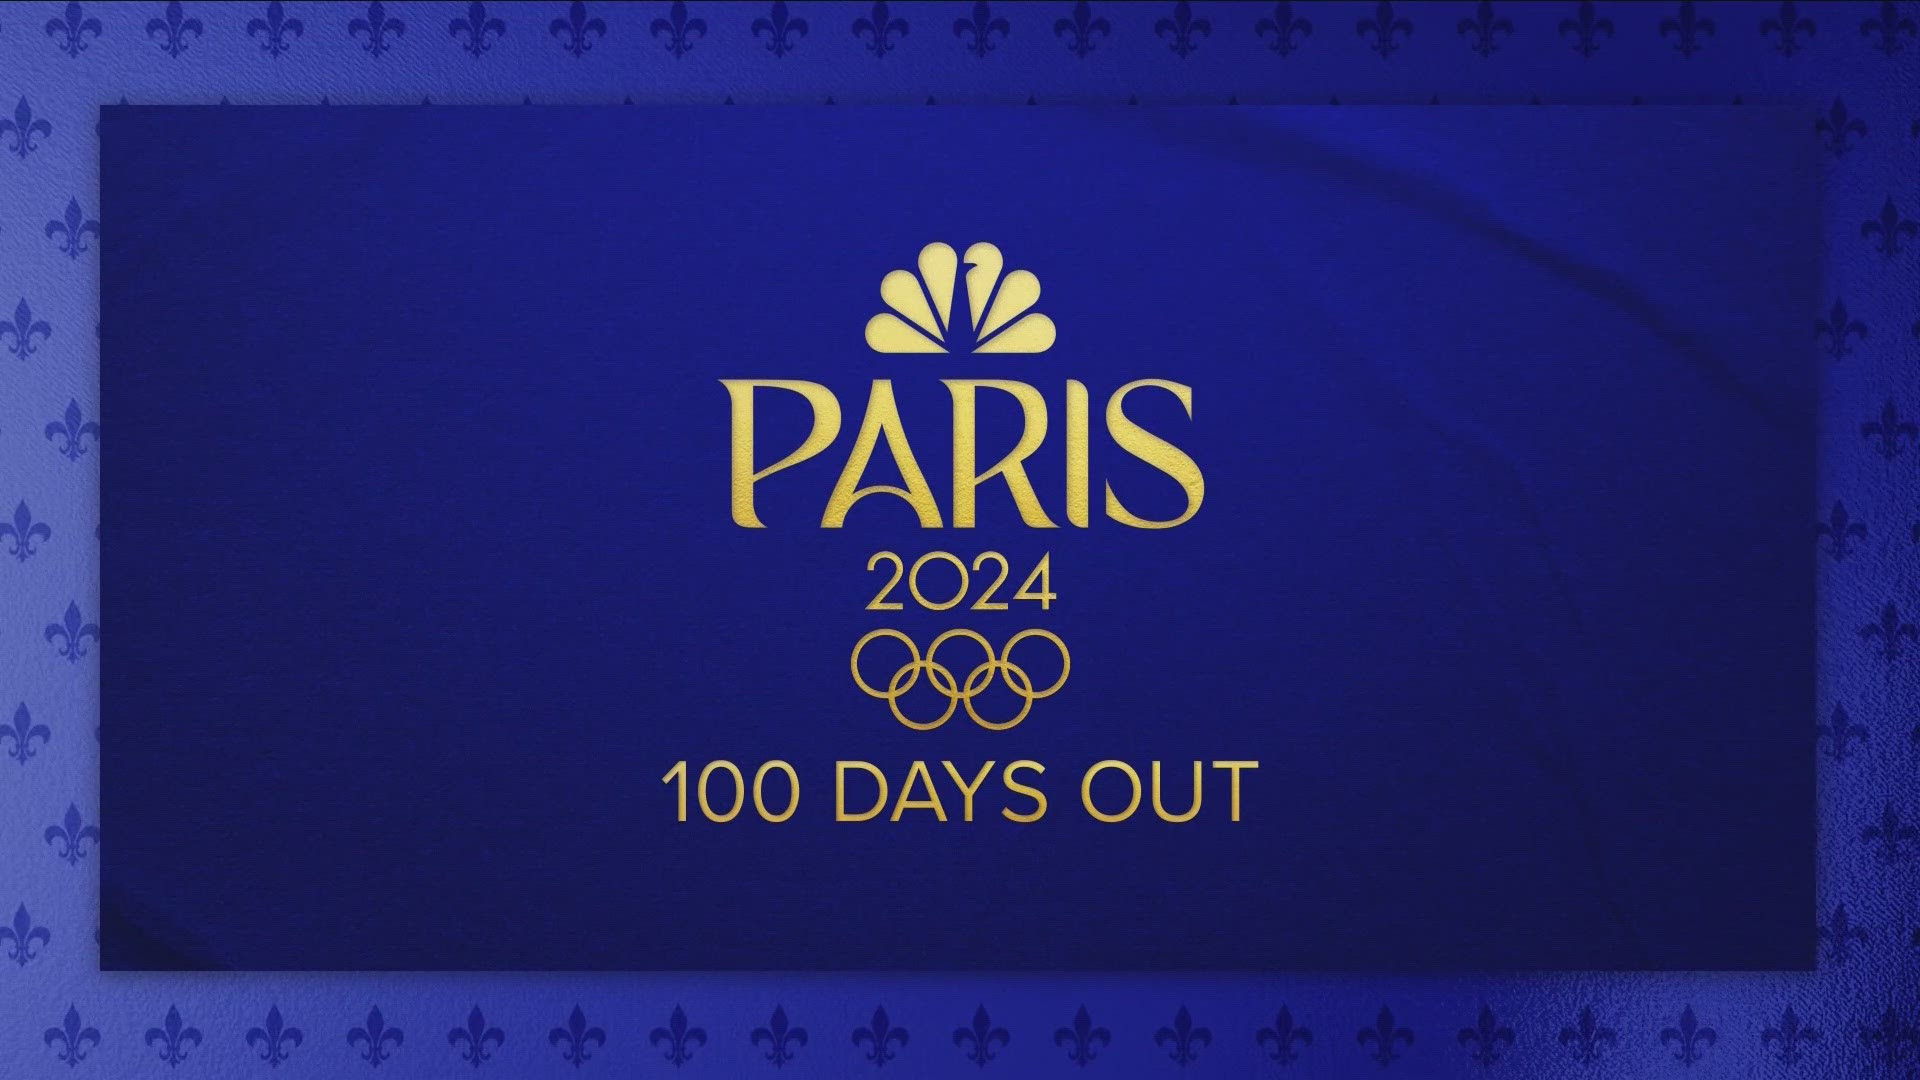 Preparations underway for 2024 Paris Olympics